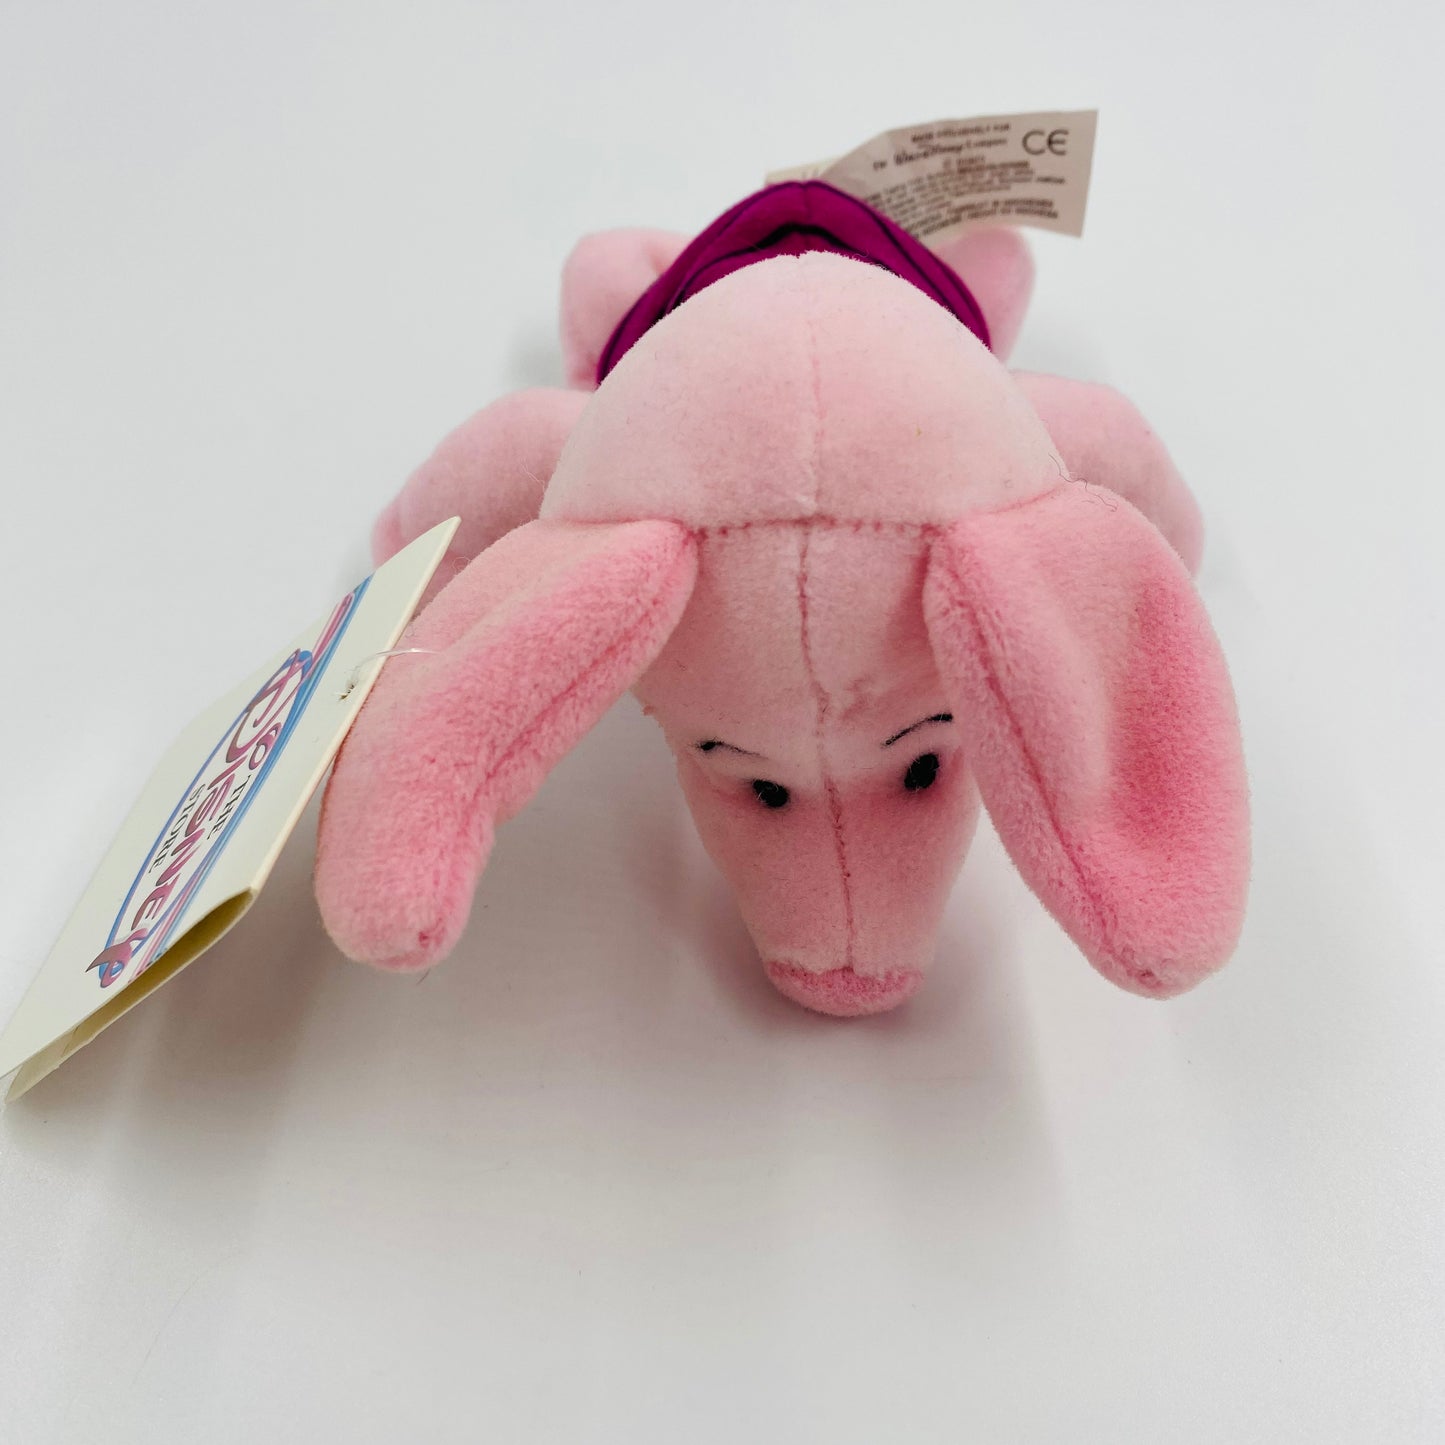 The Disney Store Winnie the Pooh Piglet mini bean bag plush